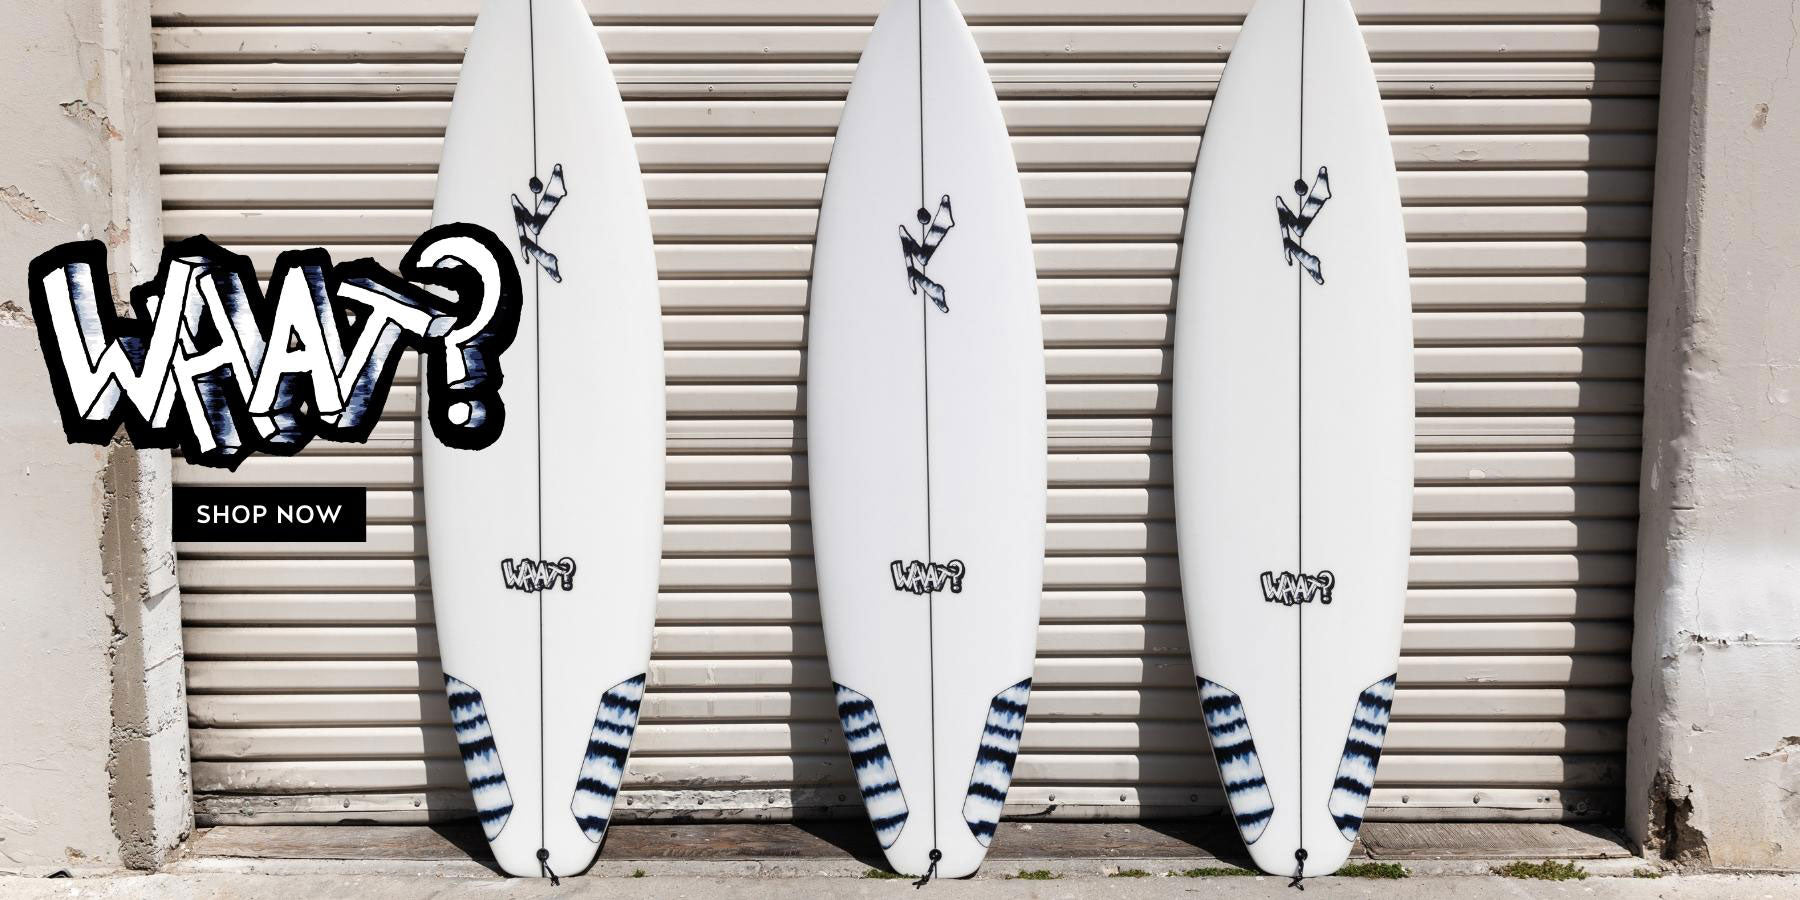 What surfboard models laid against a garage - Rusty Surfboards - Desktop